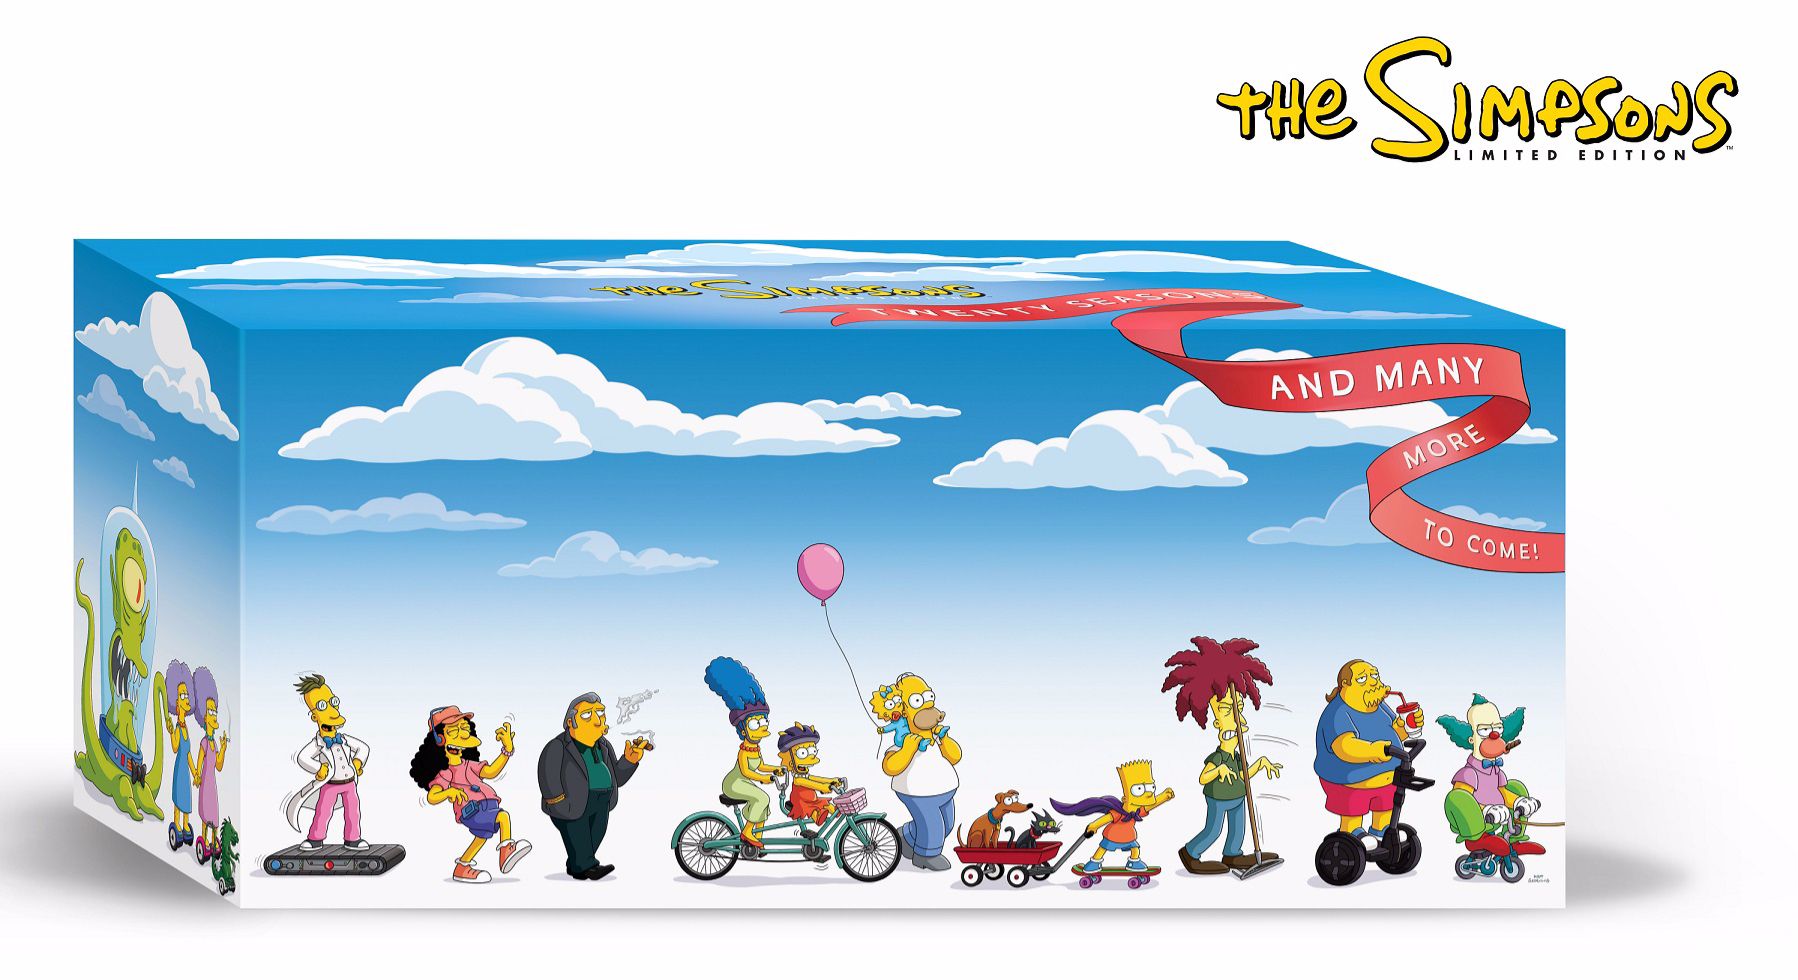 The Simpsons 20 Seasons Limited Edition Box Set